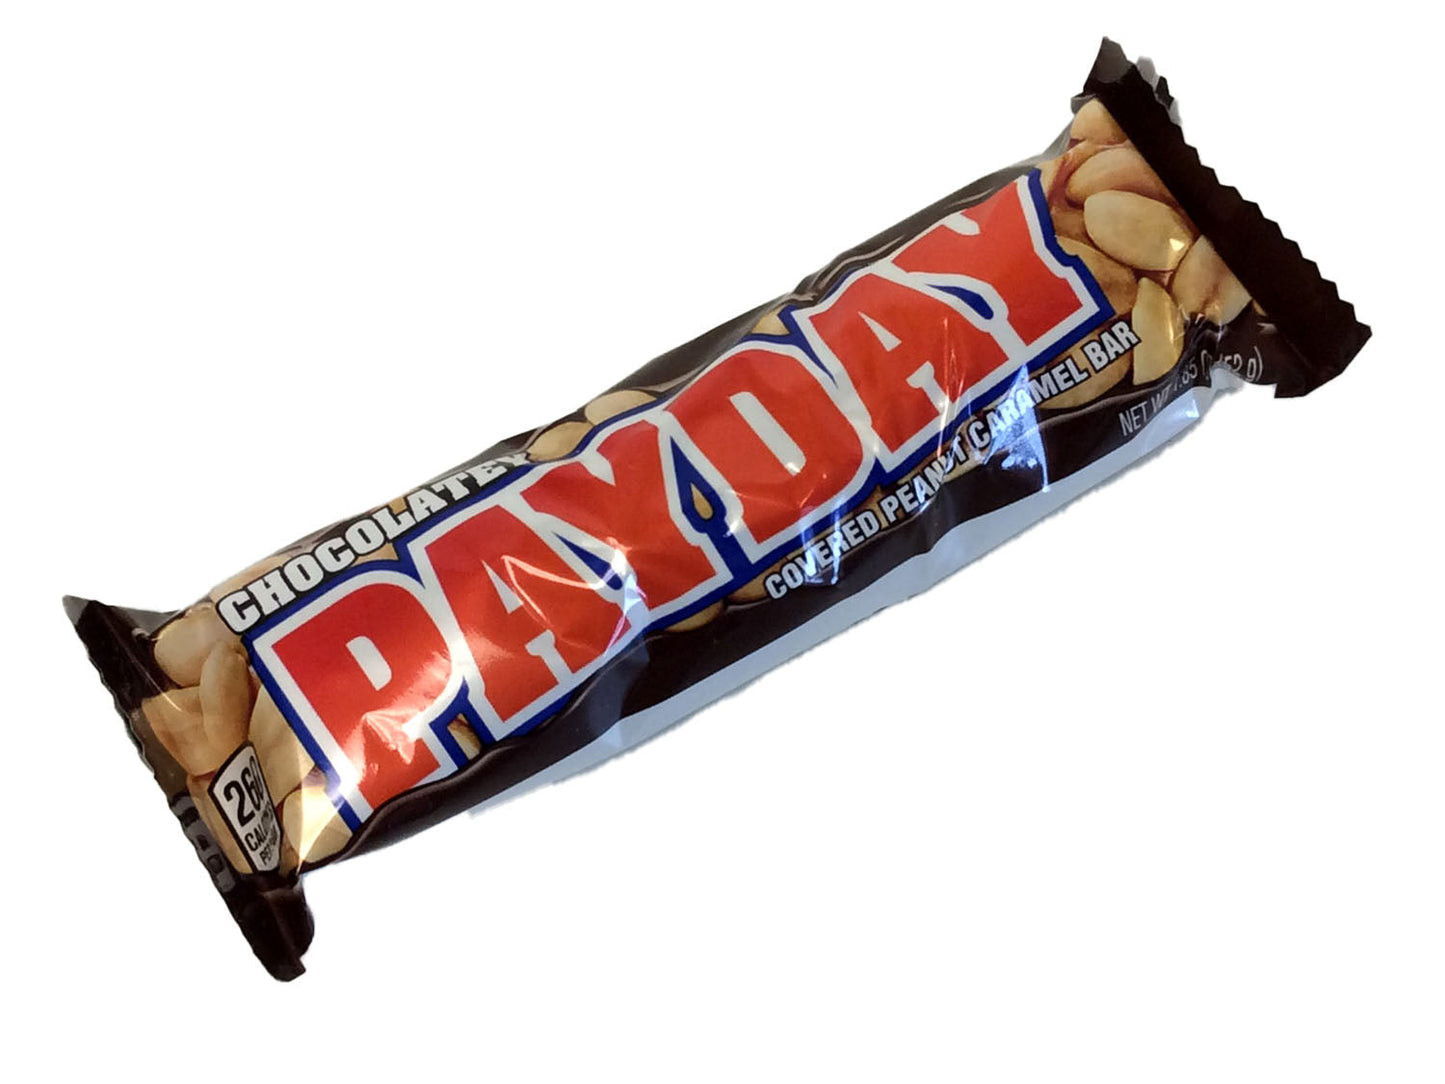 Pay Day Chocolatey - 1.85 oz bar